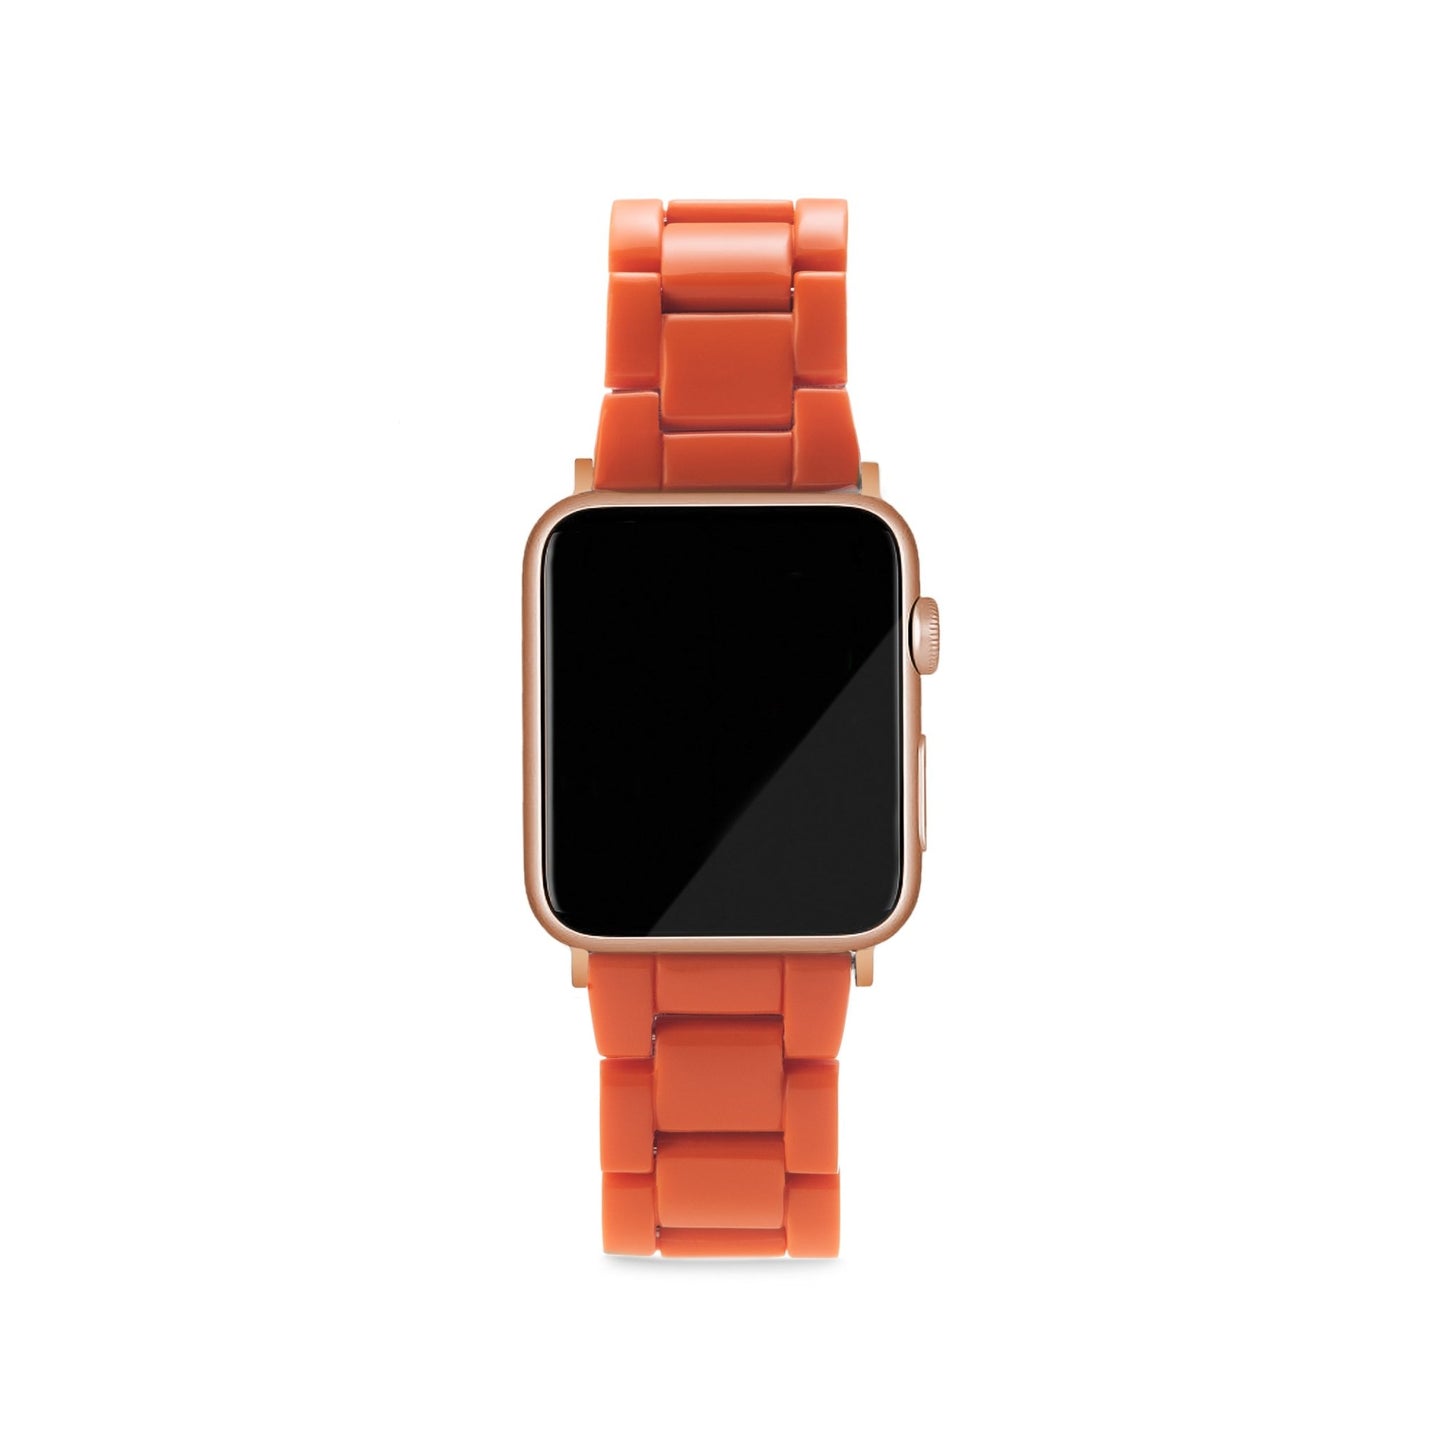 MACHETE Deluxe Apple Watch Band Set in Bright Orange